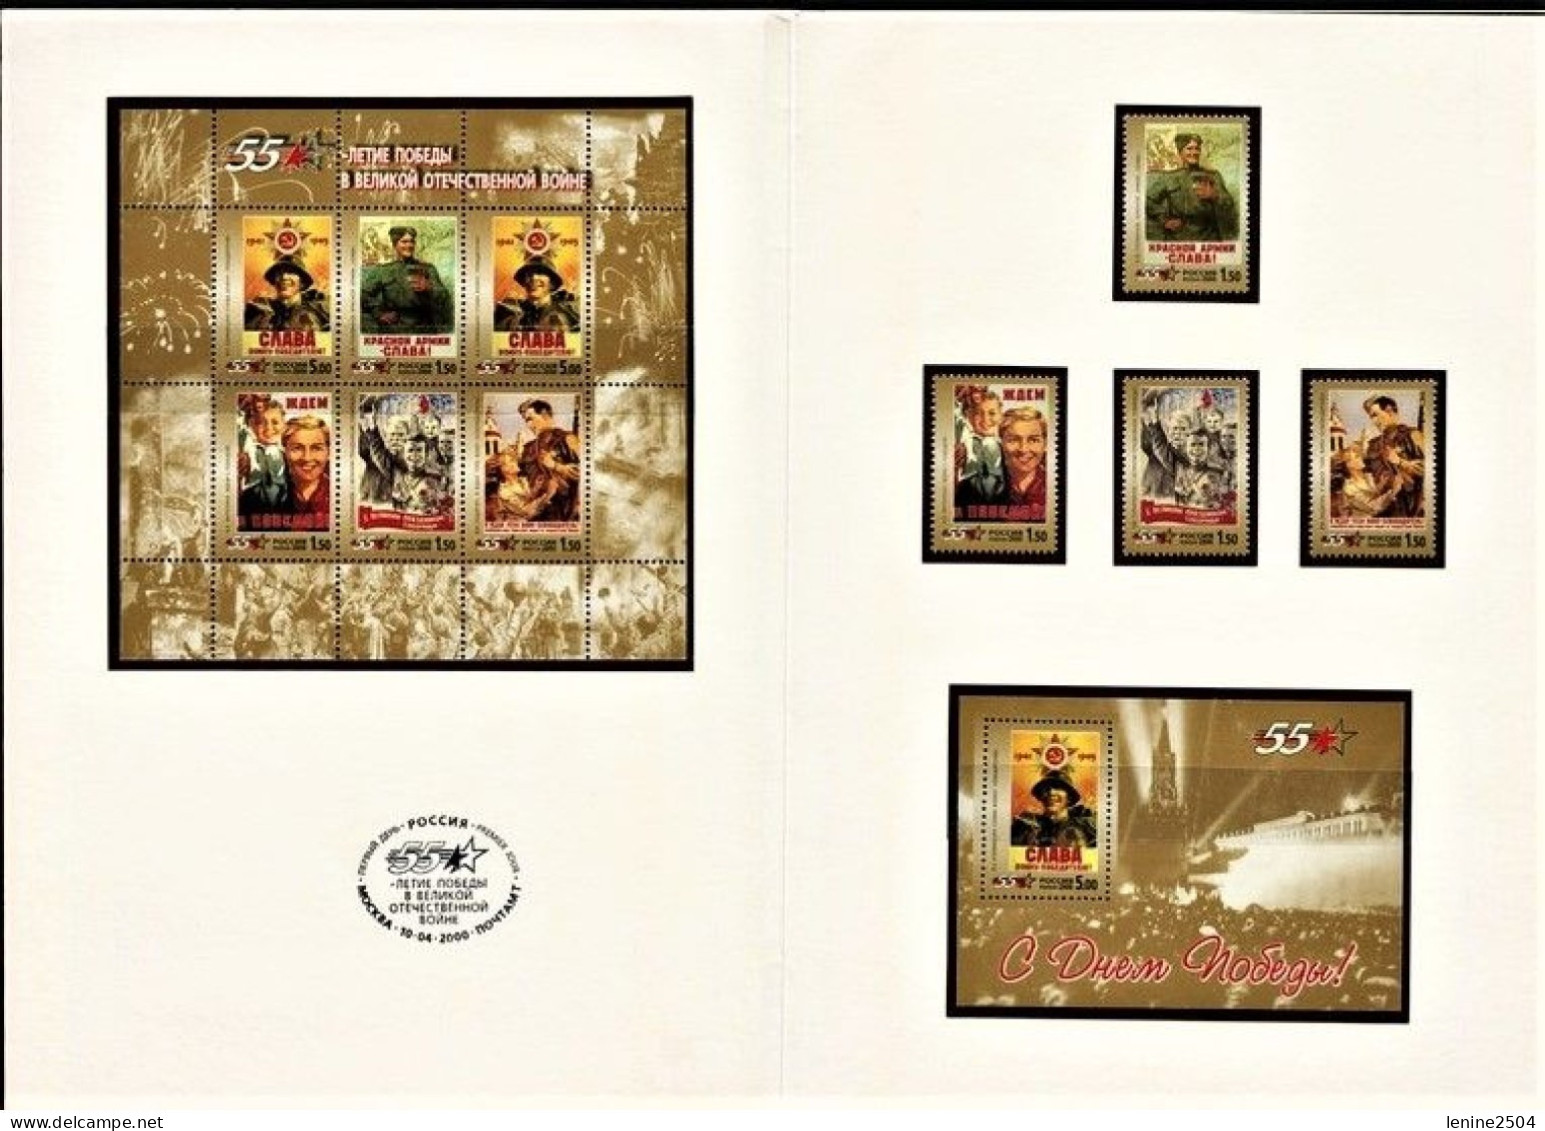 Russie 2000 Yvert N° 6456-6459 + Bloc 247 ** Emission 1er Jour Carnet Prestige Folder Booklet. Assez Rare Type 2 - Unused Stamps